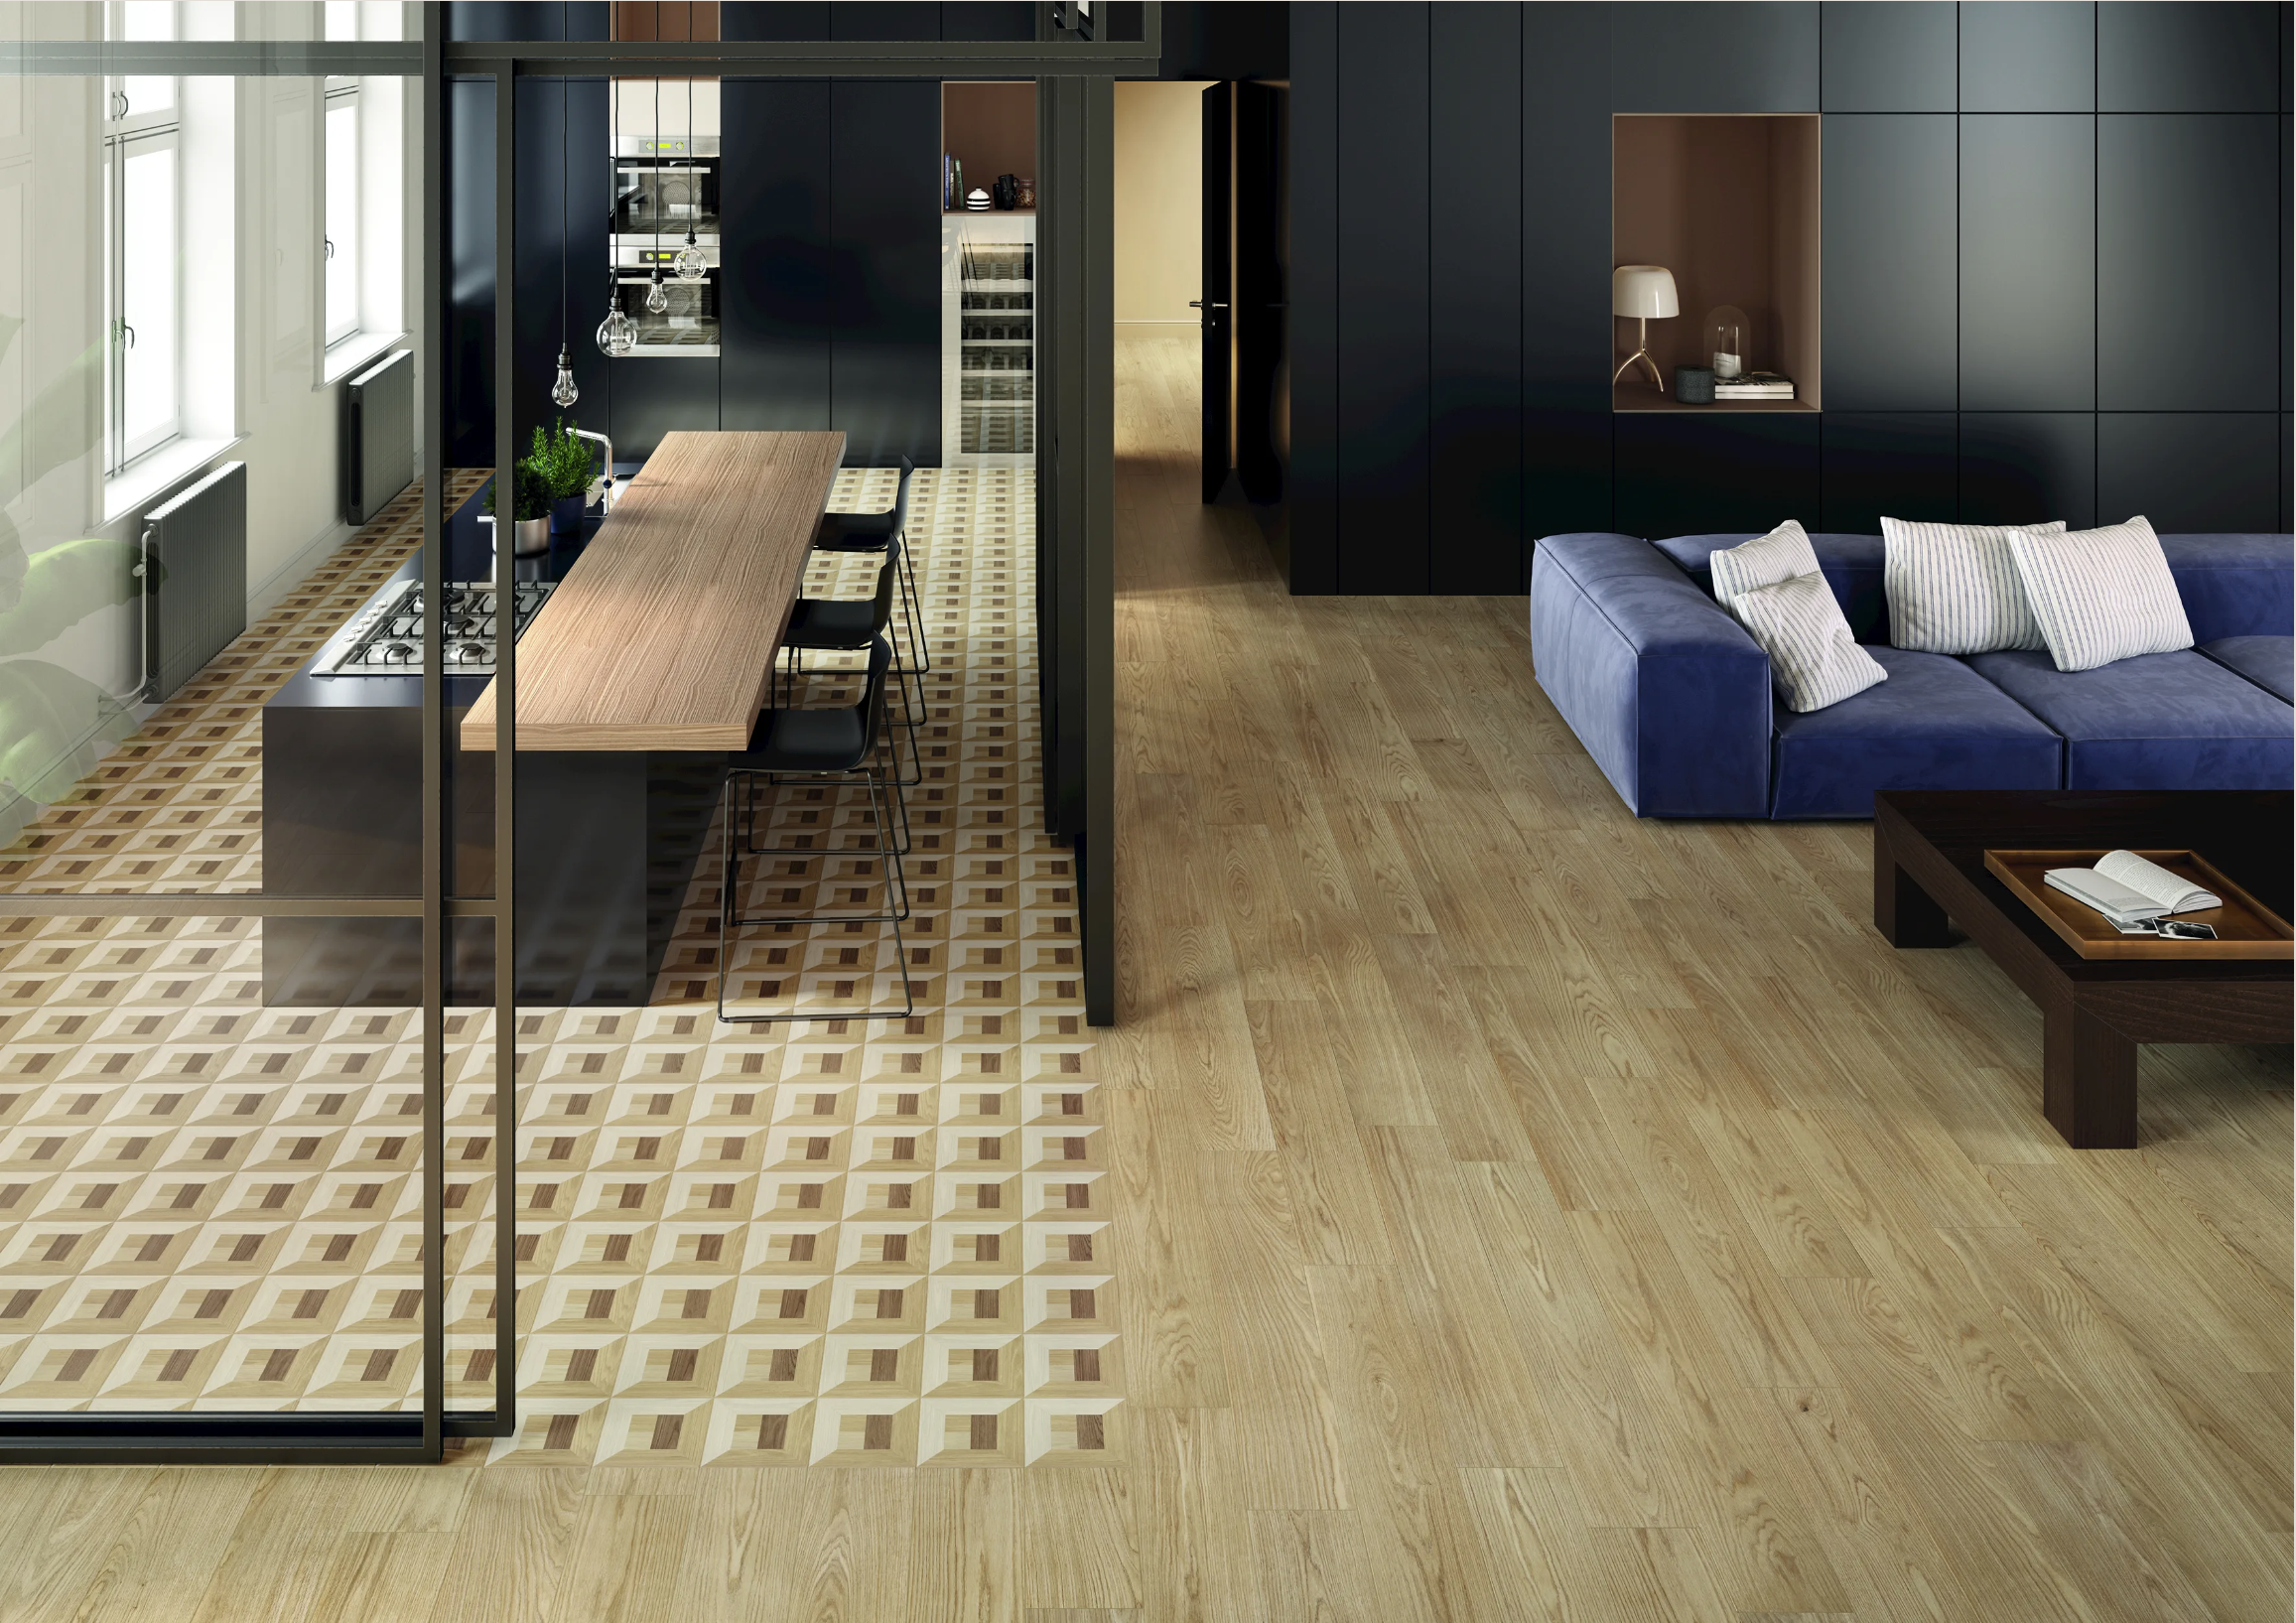 Dorato Porcelain Tile Floor Dimore R9 series by Emilceramica Group 20x120 1st Choice  
